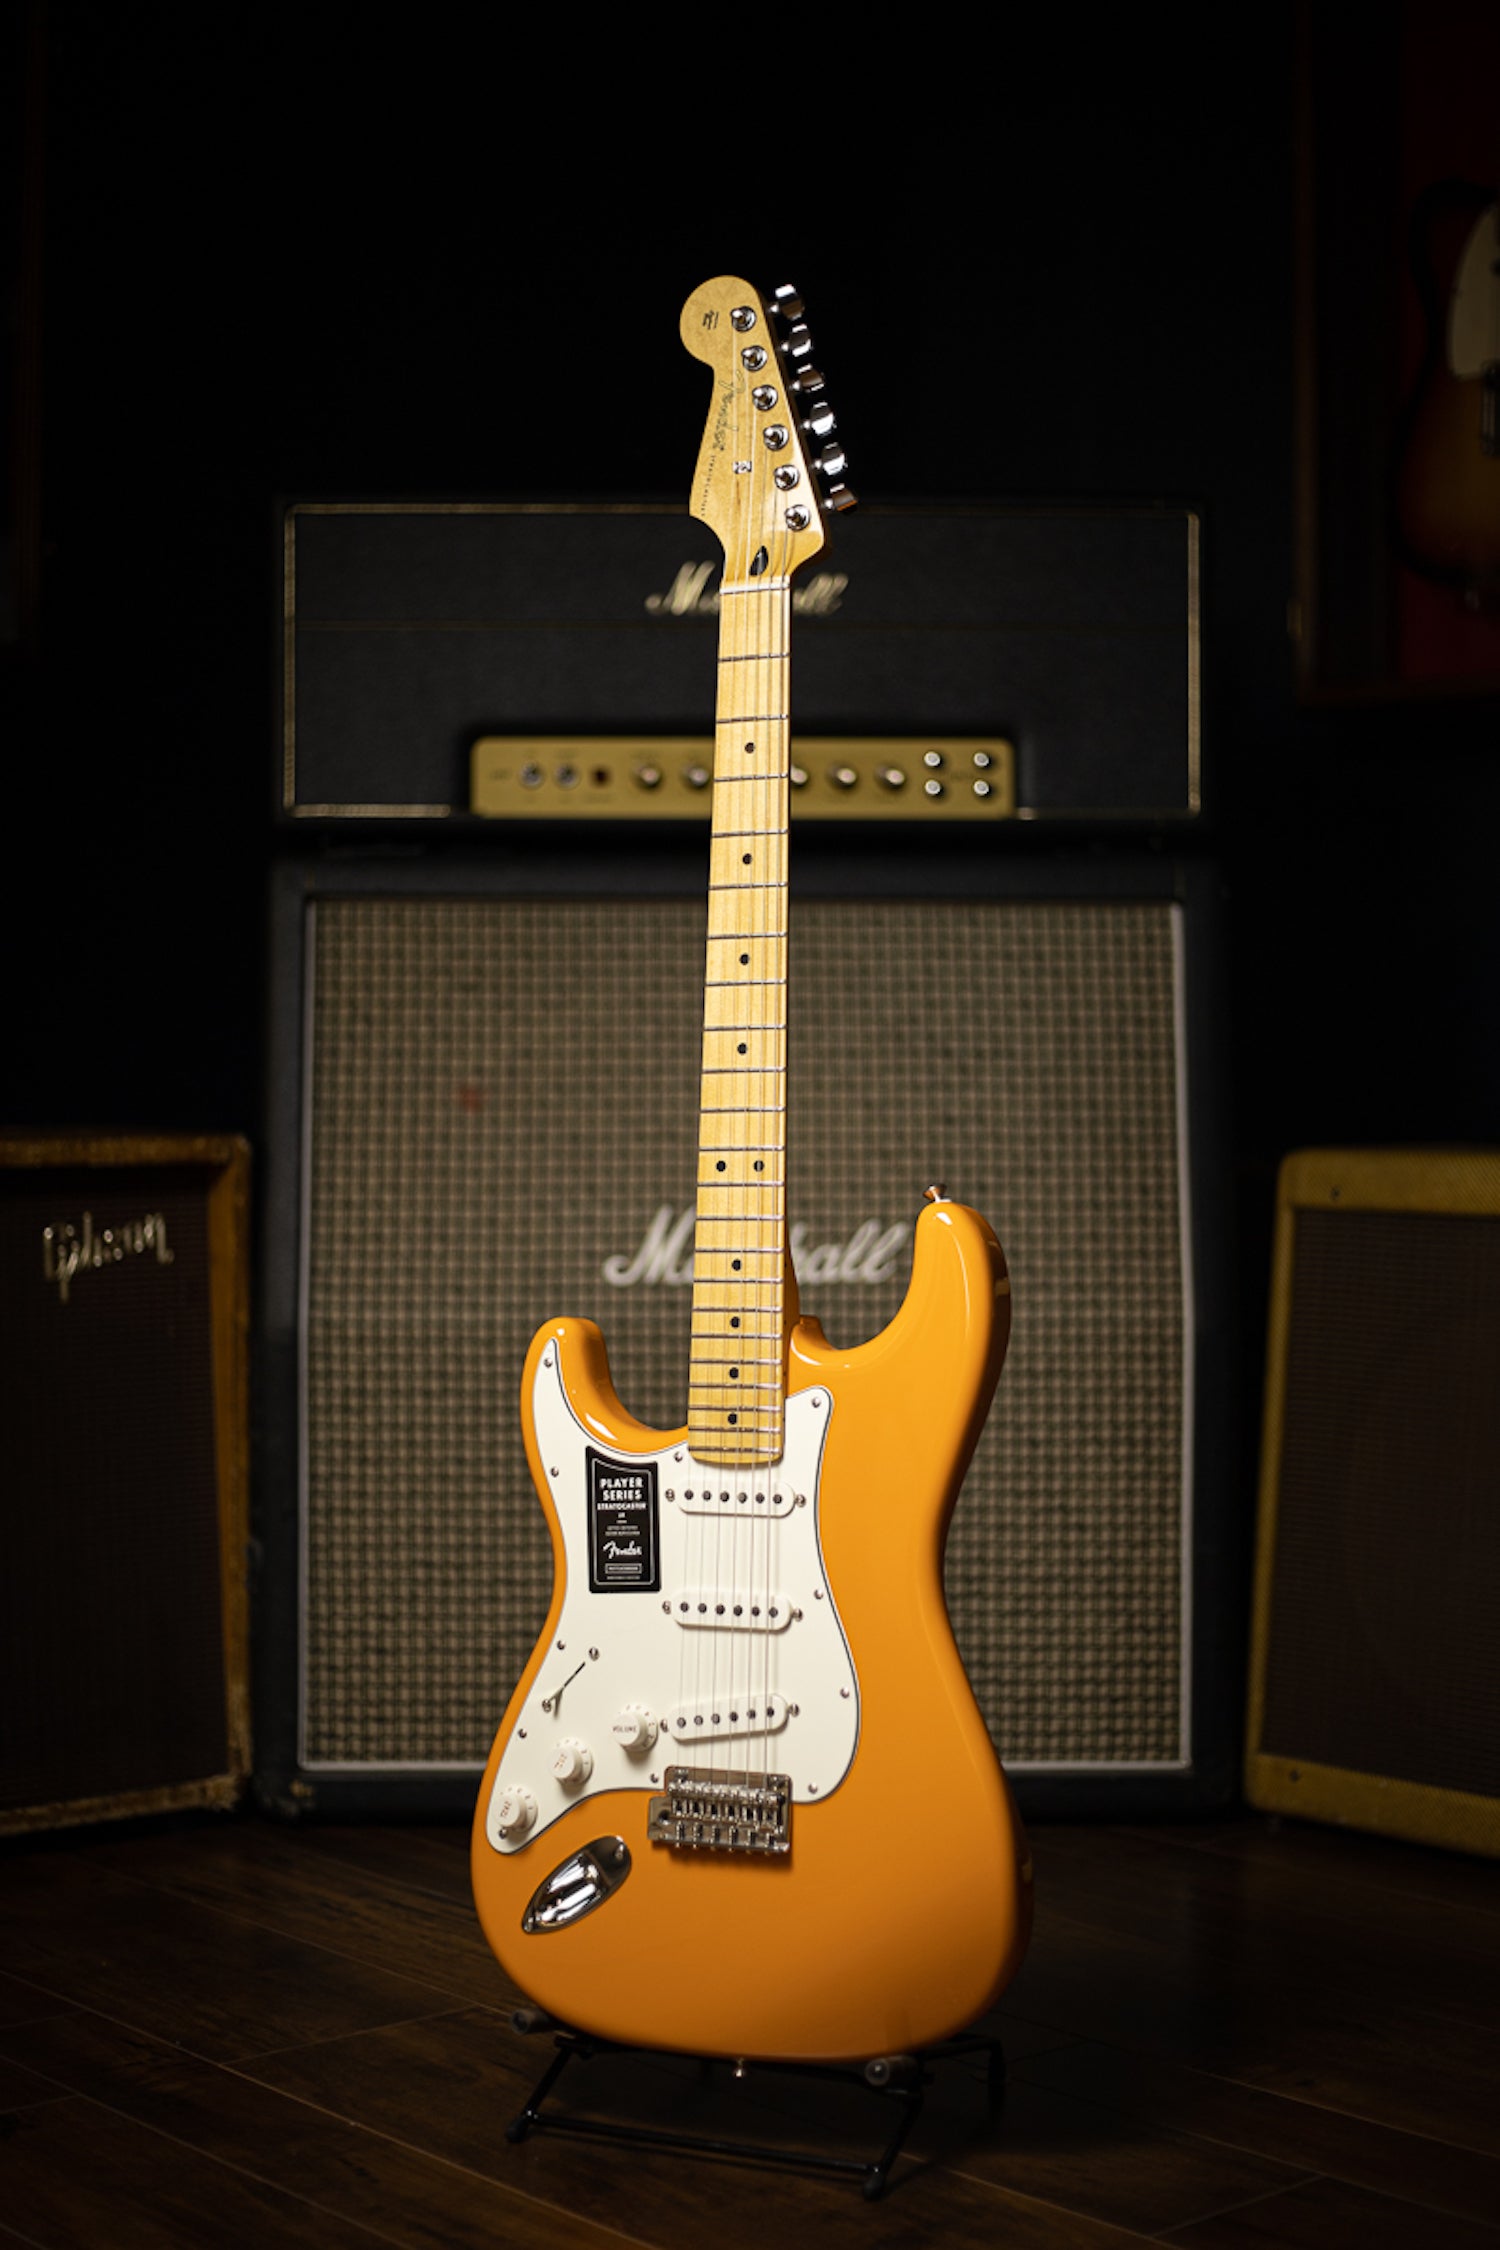 Fender Stratocaster Player Series Left Handed Electric Guitar